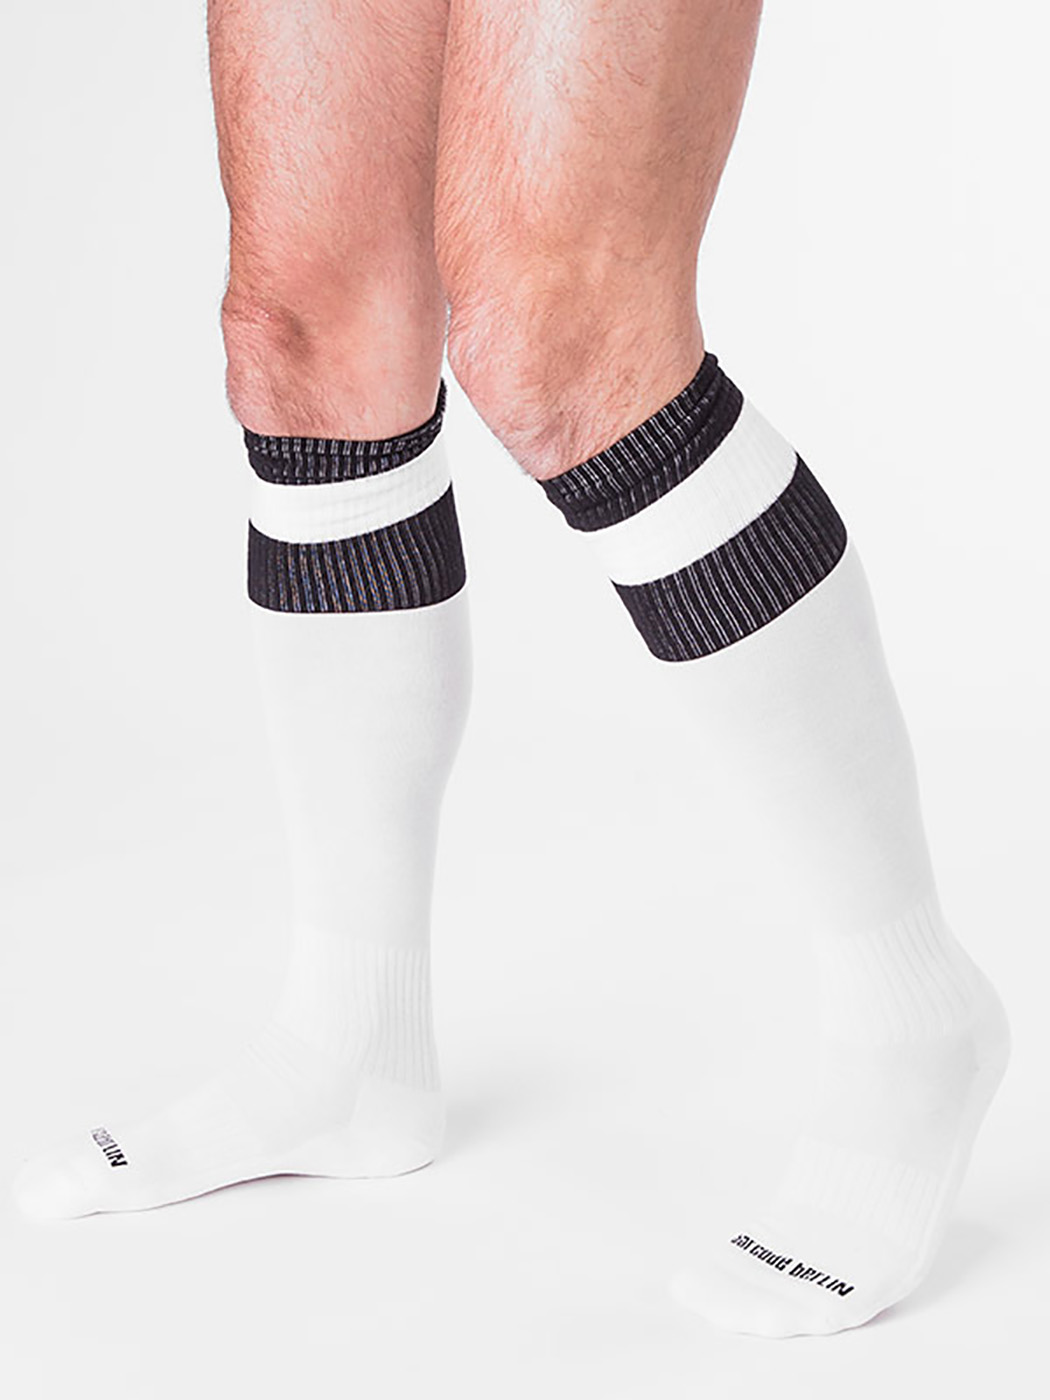 BC 90143 black-white L/XL Football Socks